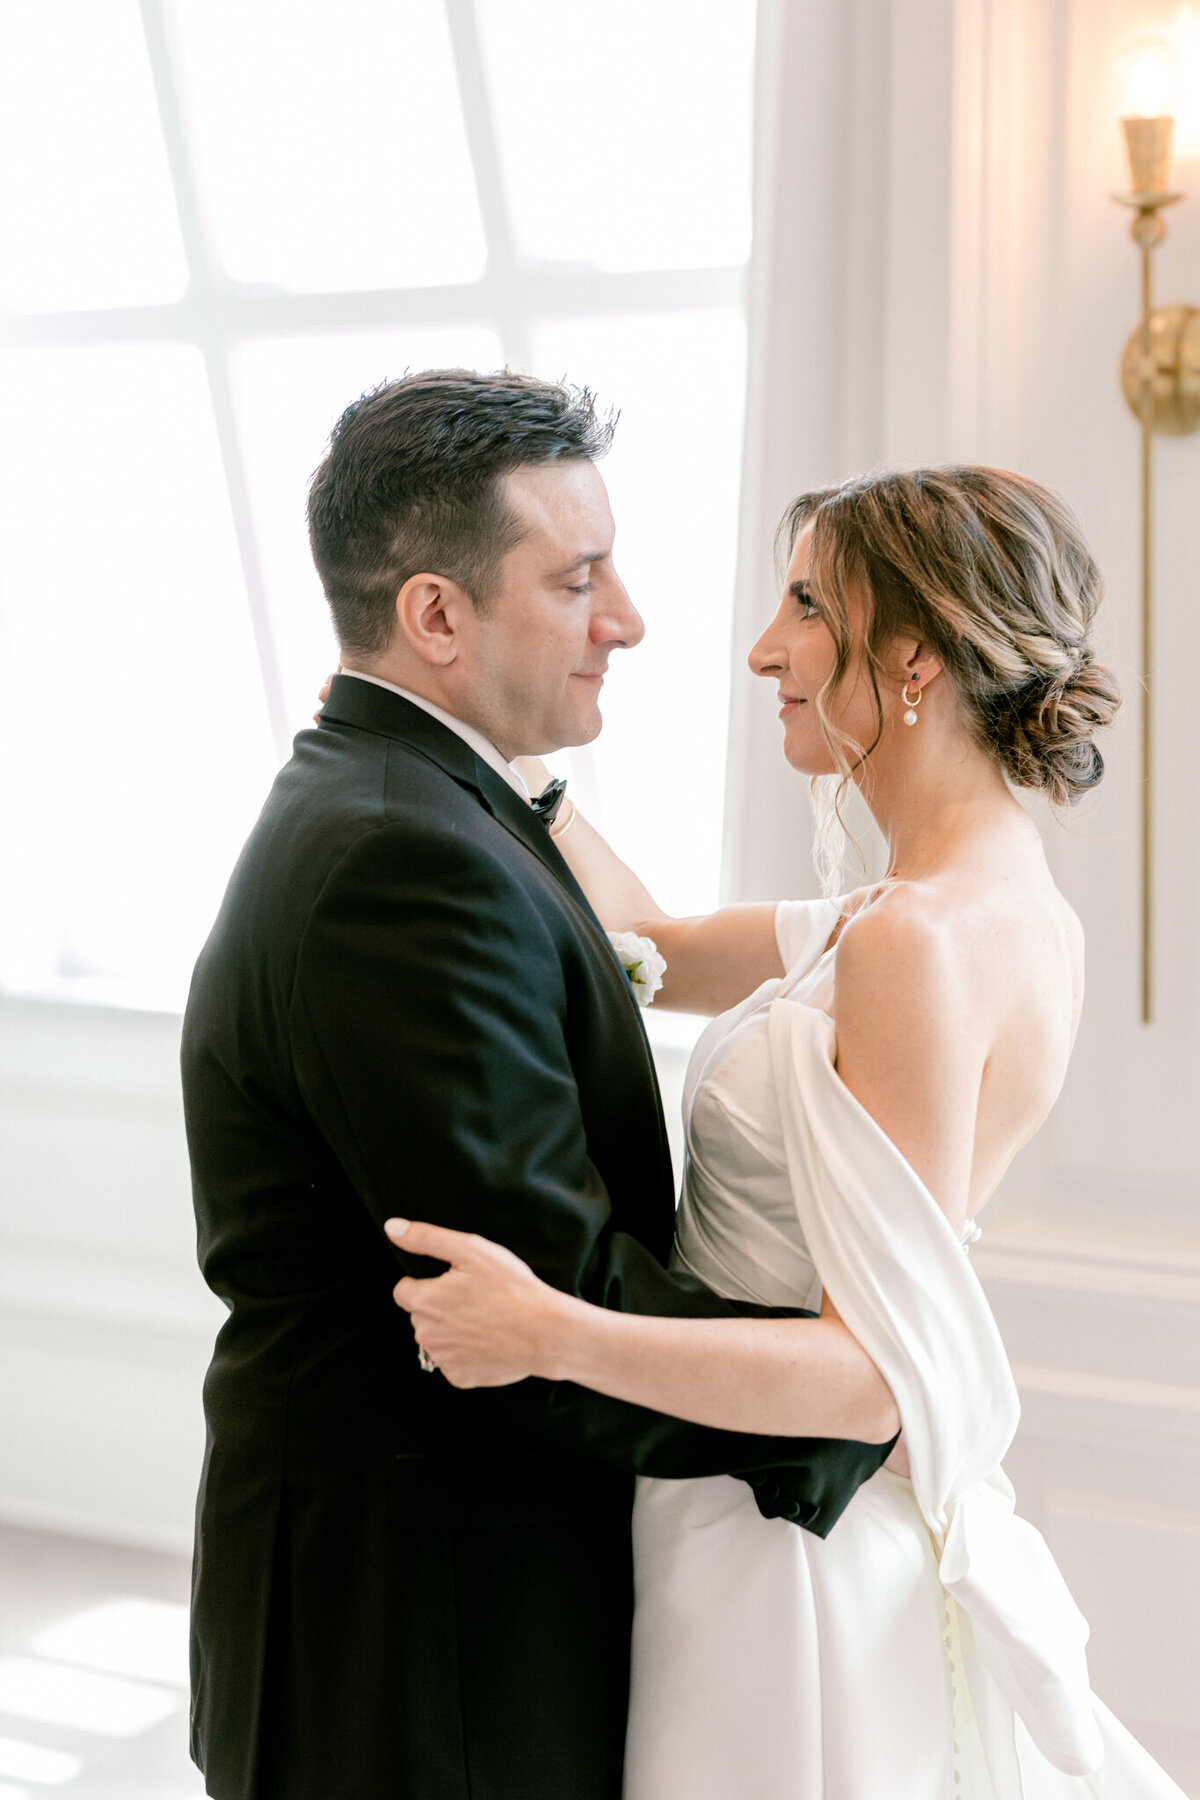 Virginia & Michael's Wedding at the Adolphus Hotel | Dallas Wedding Photographer | Sami Kathryn Photography-61